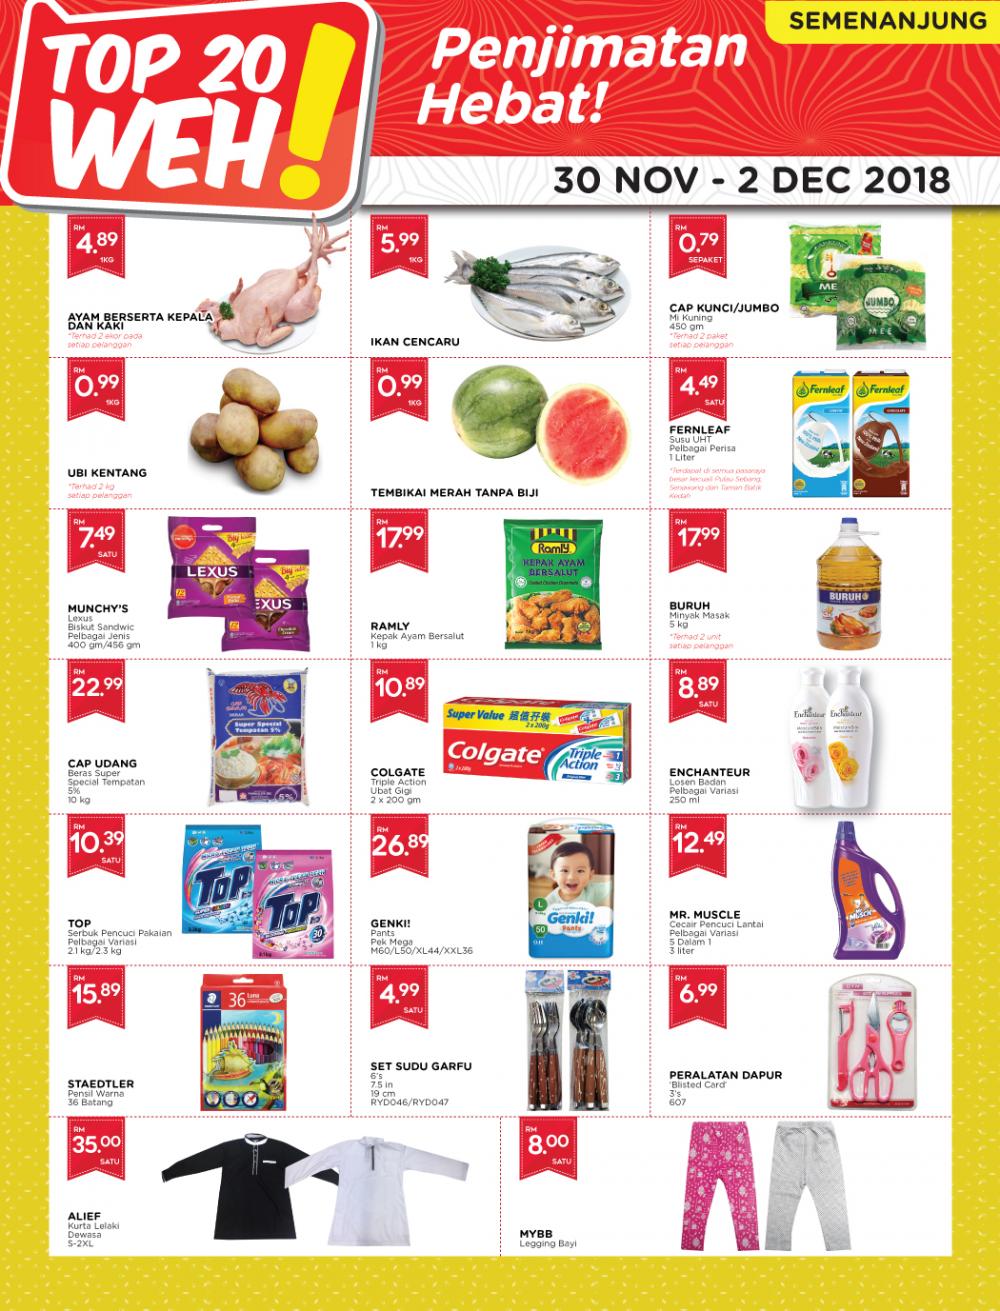 MYDIN TOP 20 WEH Promotion (30 November 2018 - 2 December 2018)